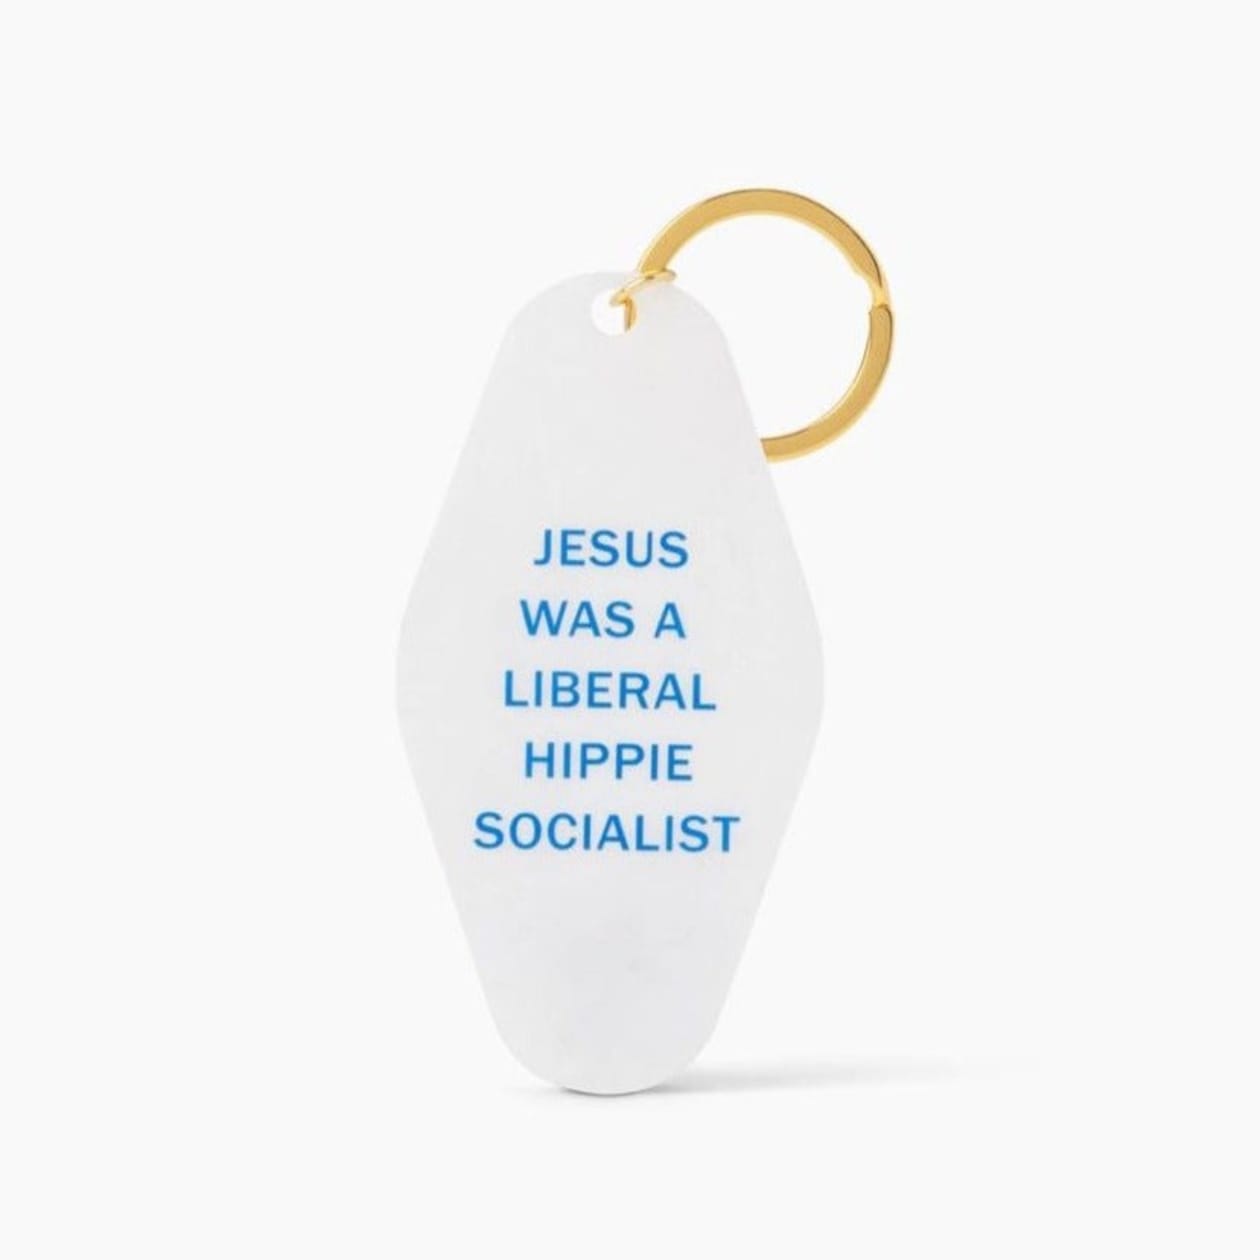 Jesus Was a Liberal Hippie Socialist Keychain in White Shimmer